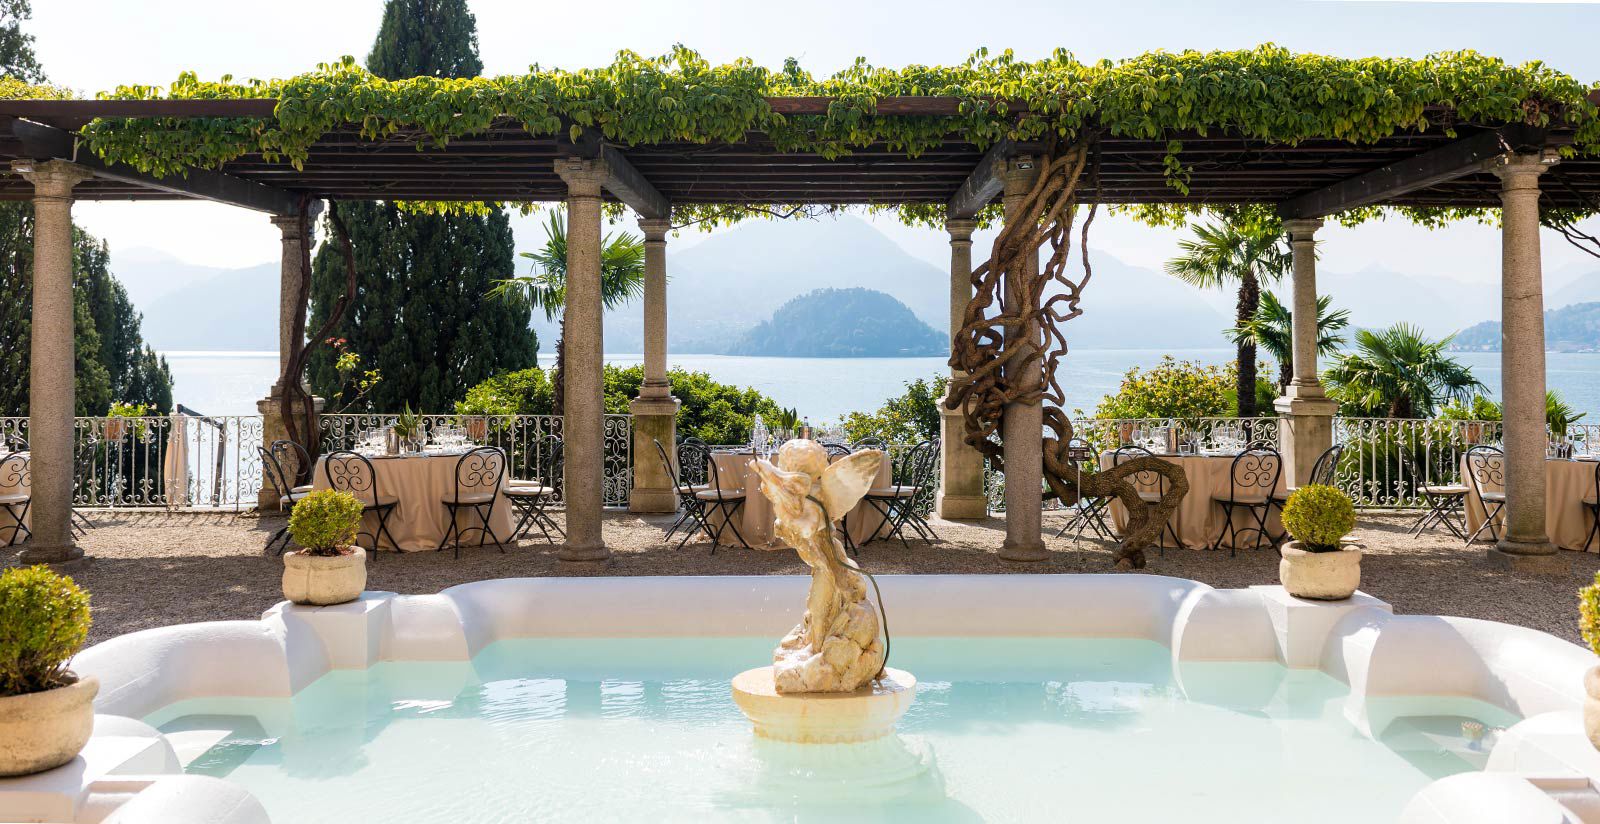 Hotel Villa Cipressi - Hotel 4 stelle per vacanza relax Varenna 6